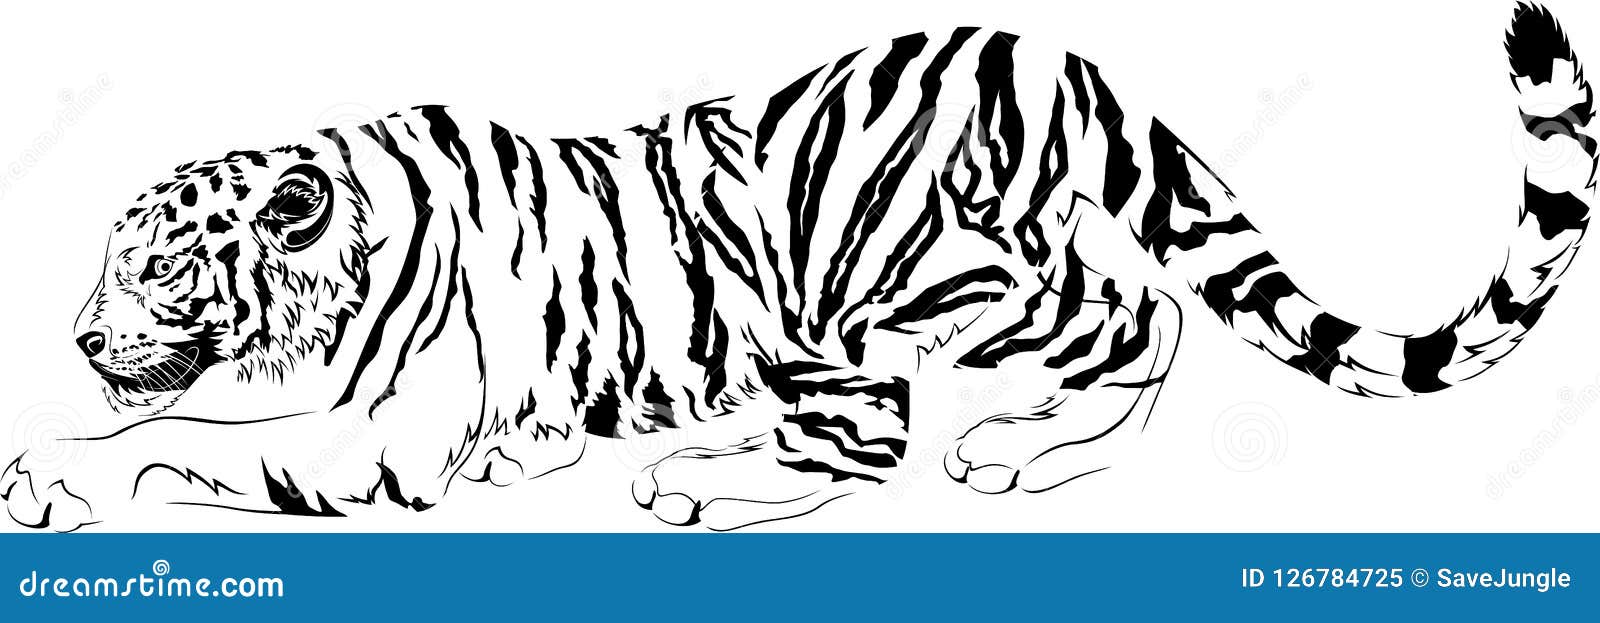  drawings black and white predator tiger e